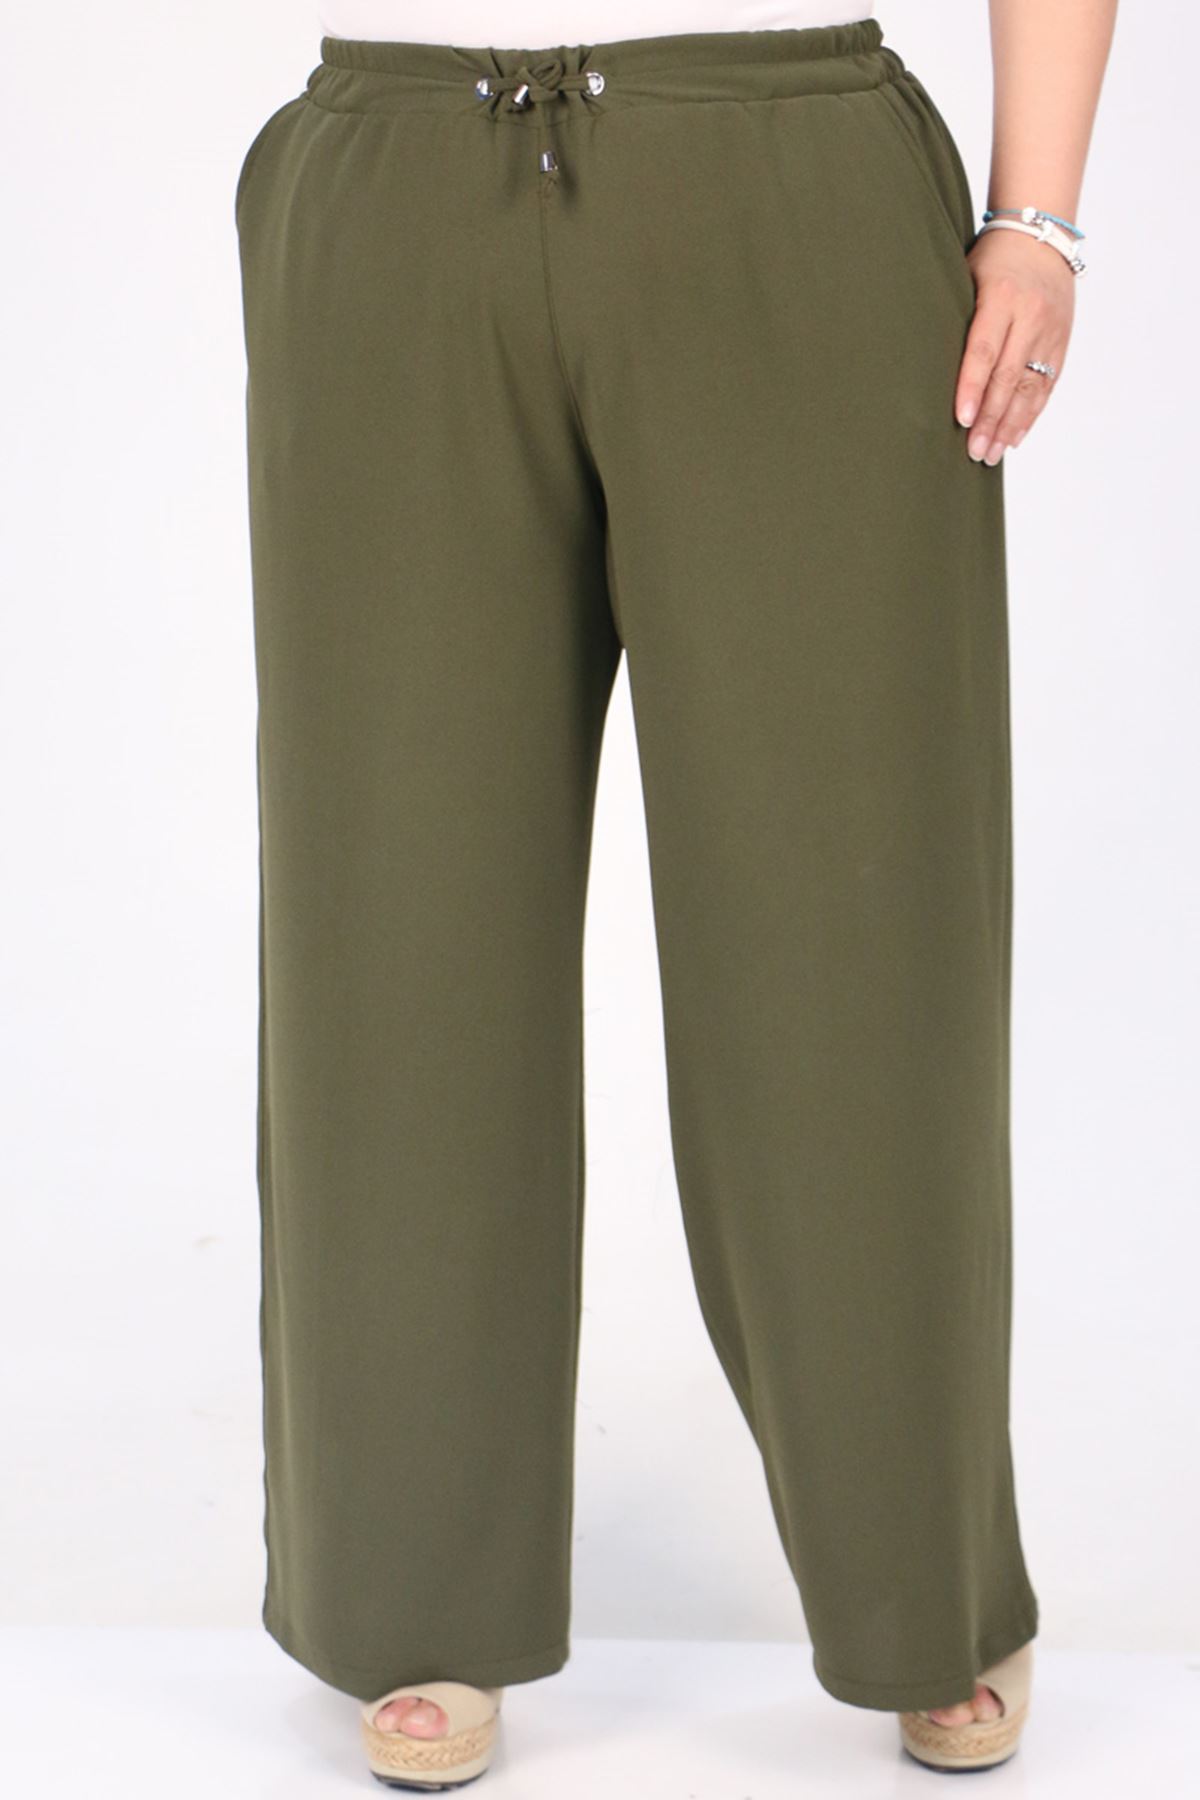 39007 Large Size Elastic Waist Wide Leg Double Layer Crepe Trousers - Khaki